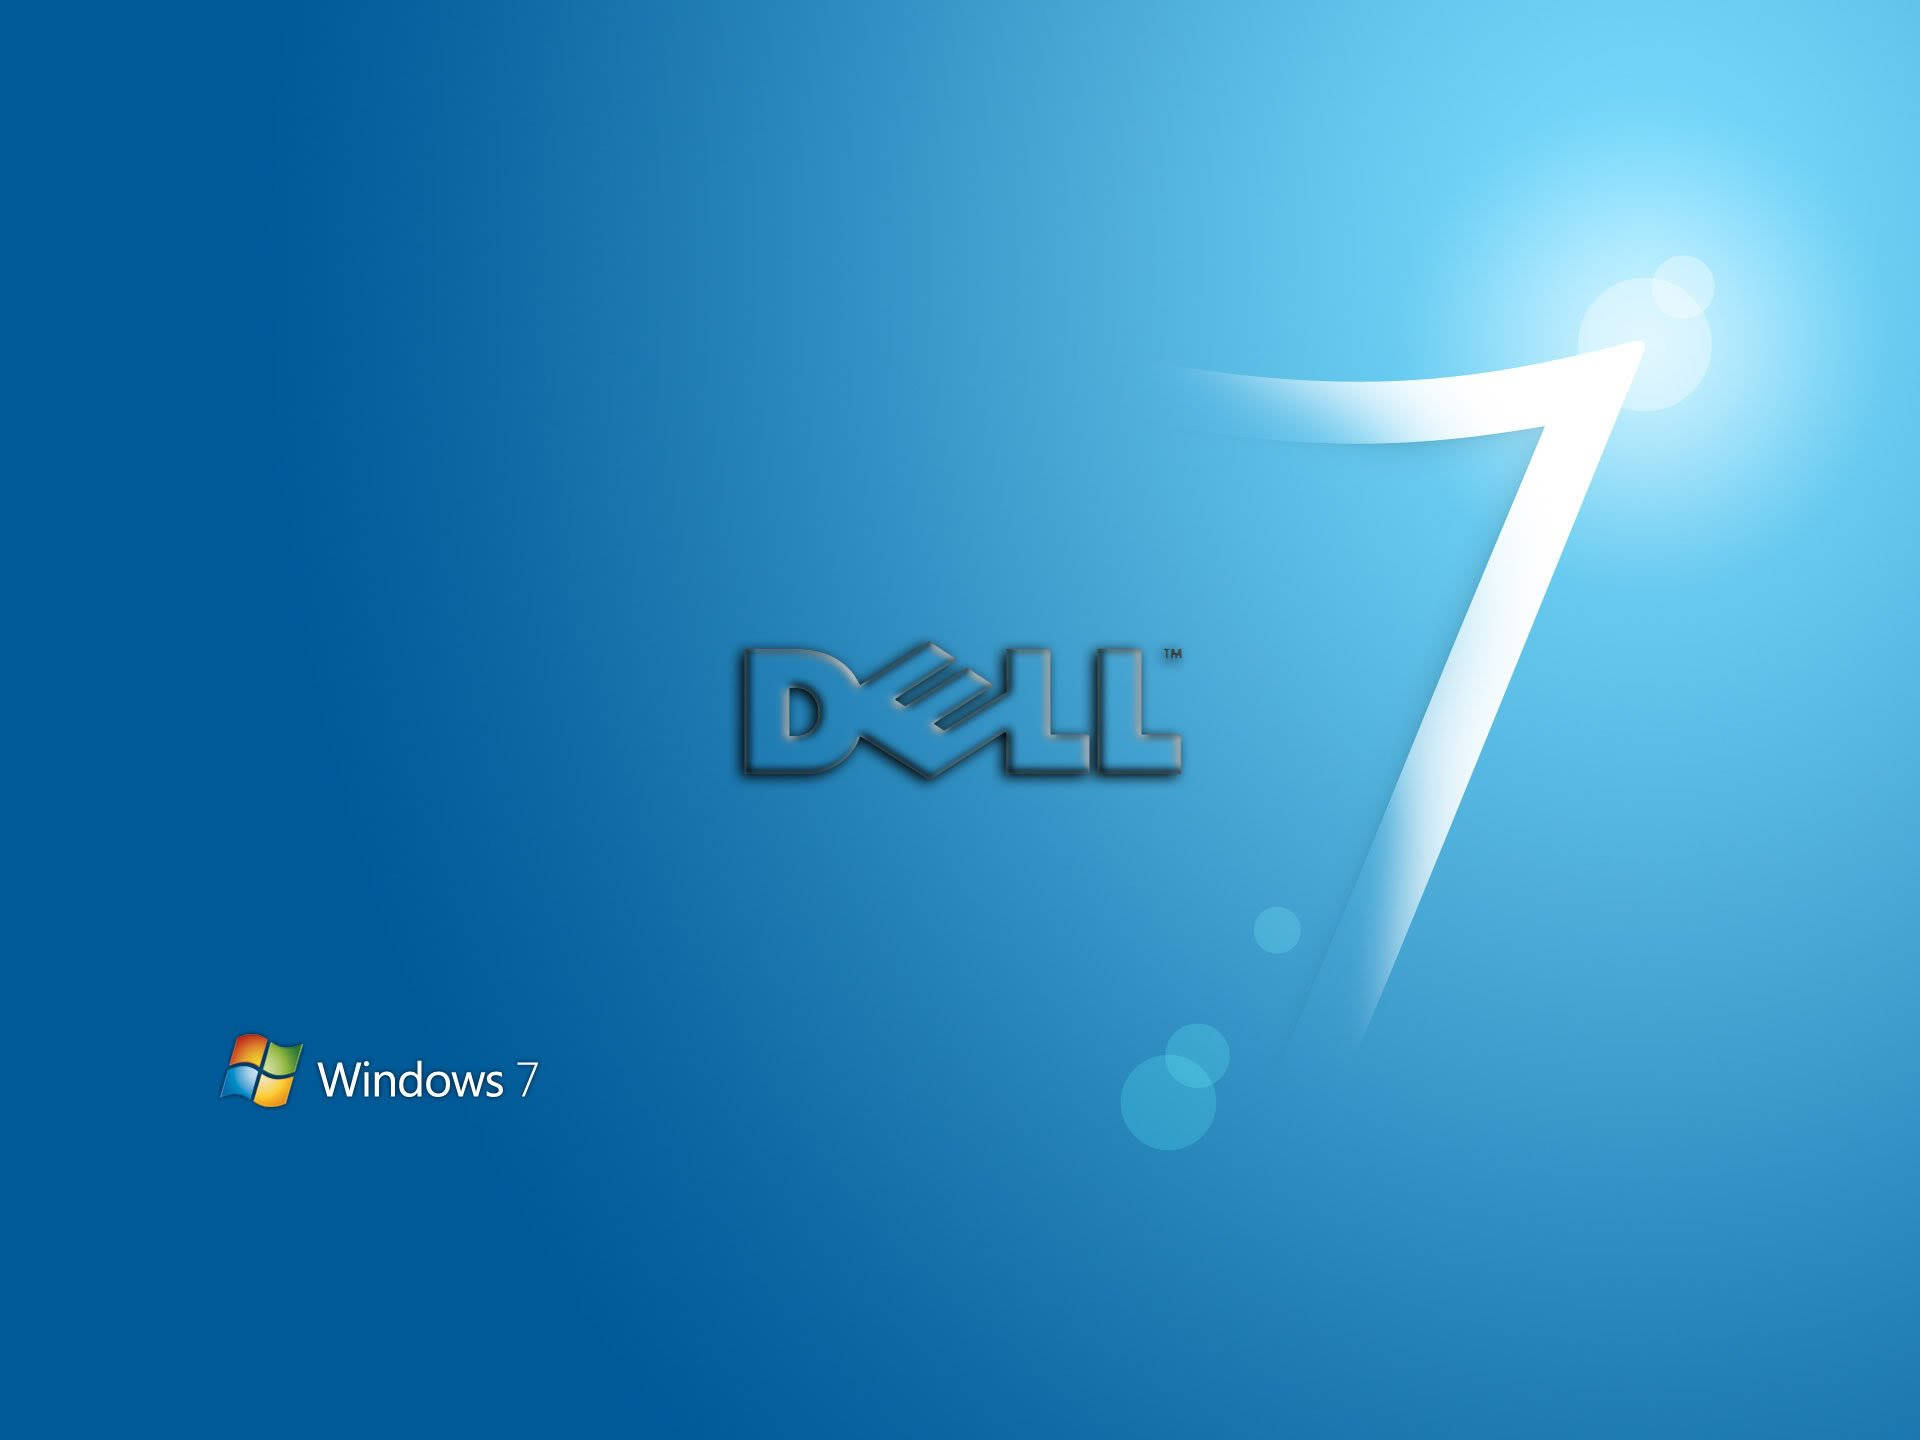 Windows 7 Dell Hd Logo Background